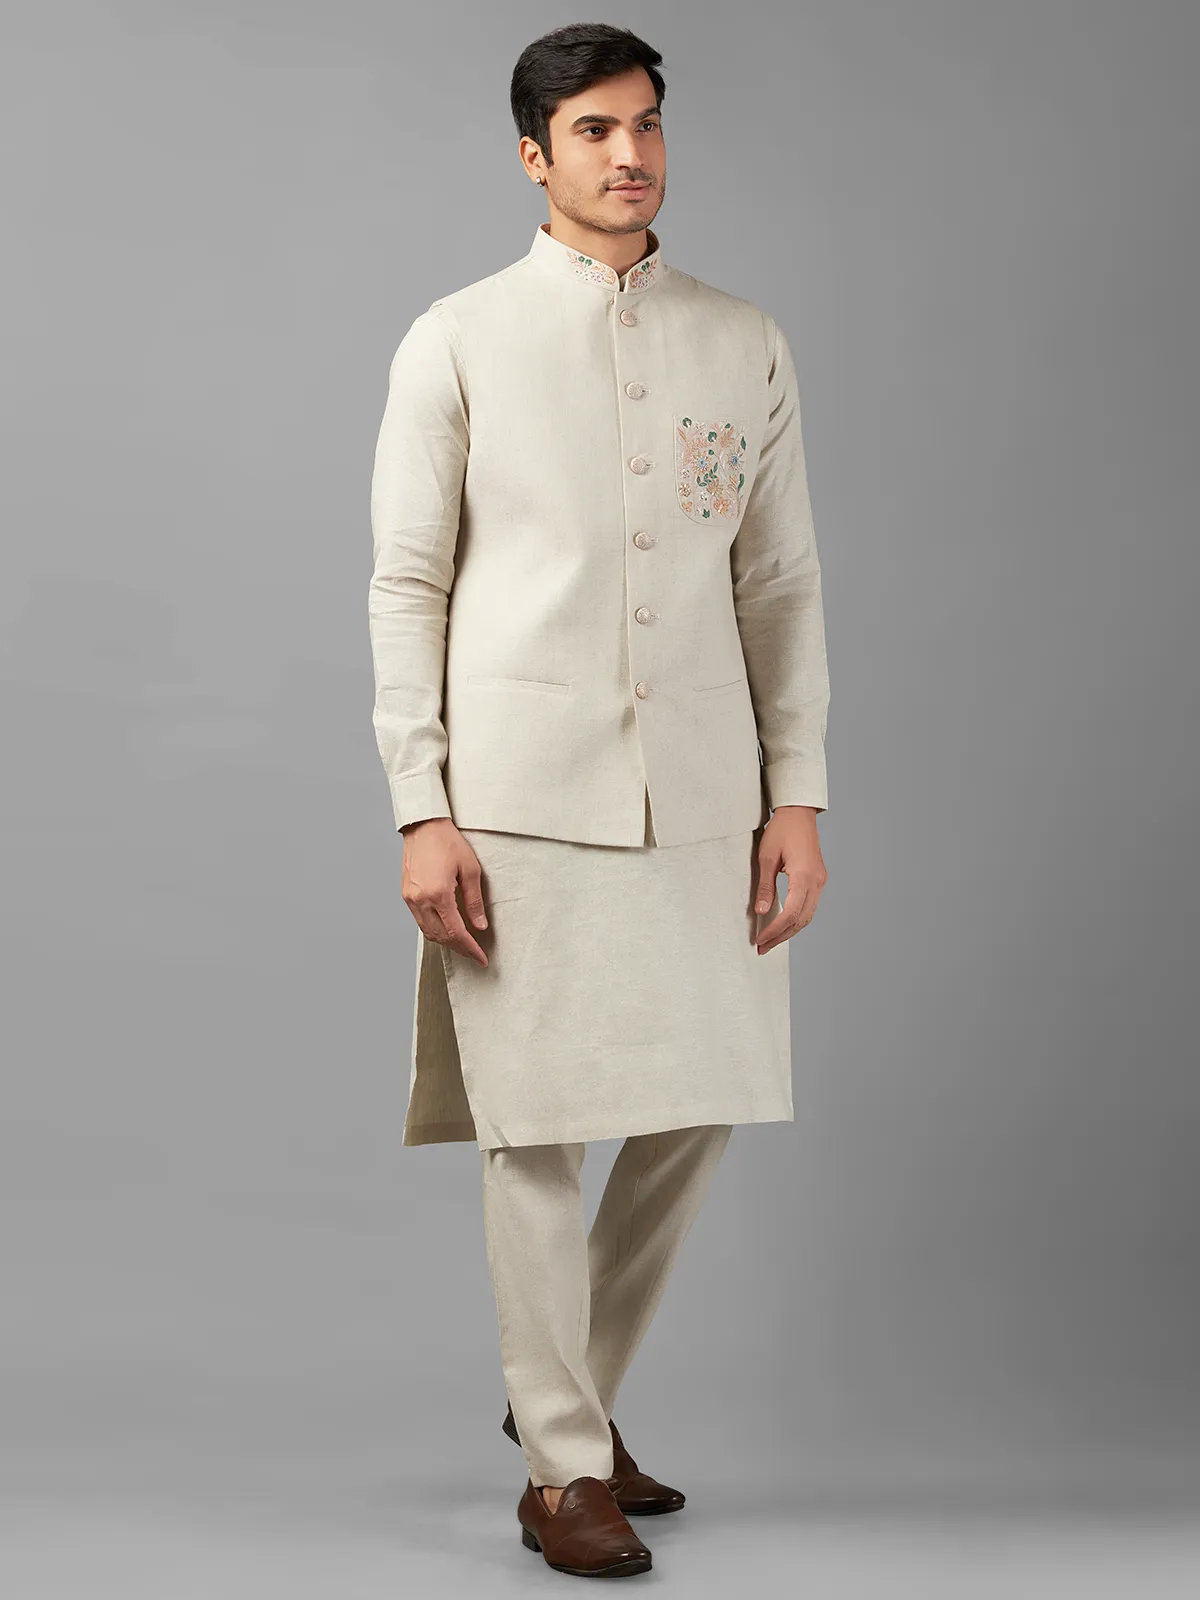 Classic off-white linen waistcoat set